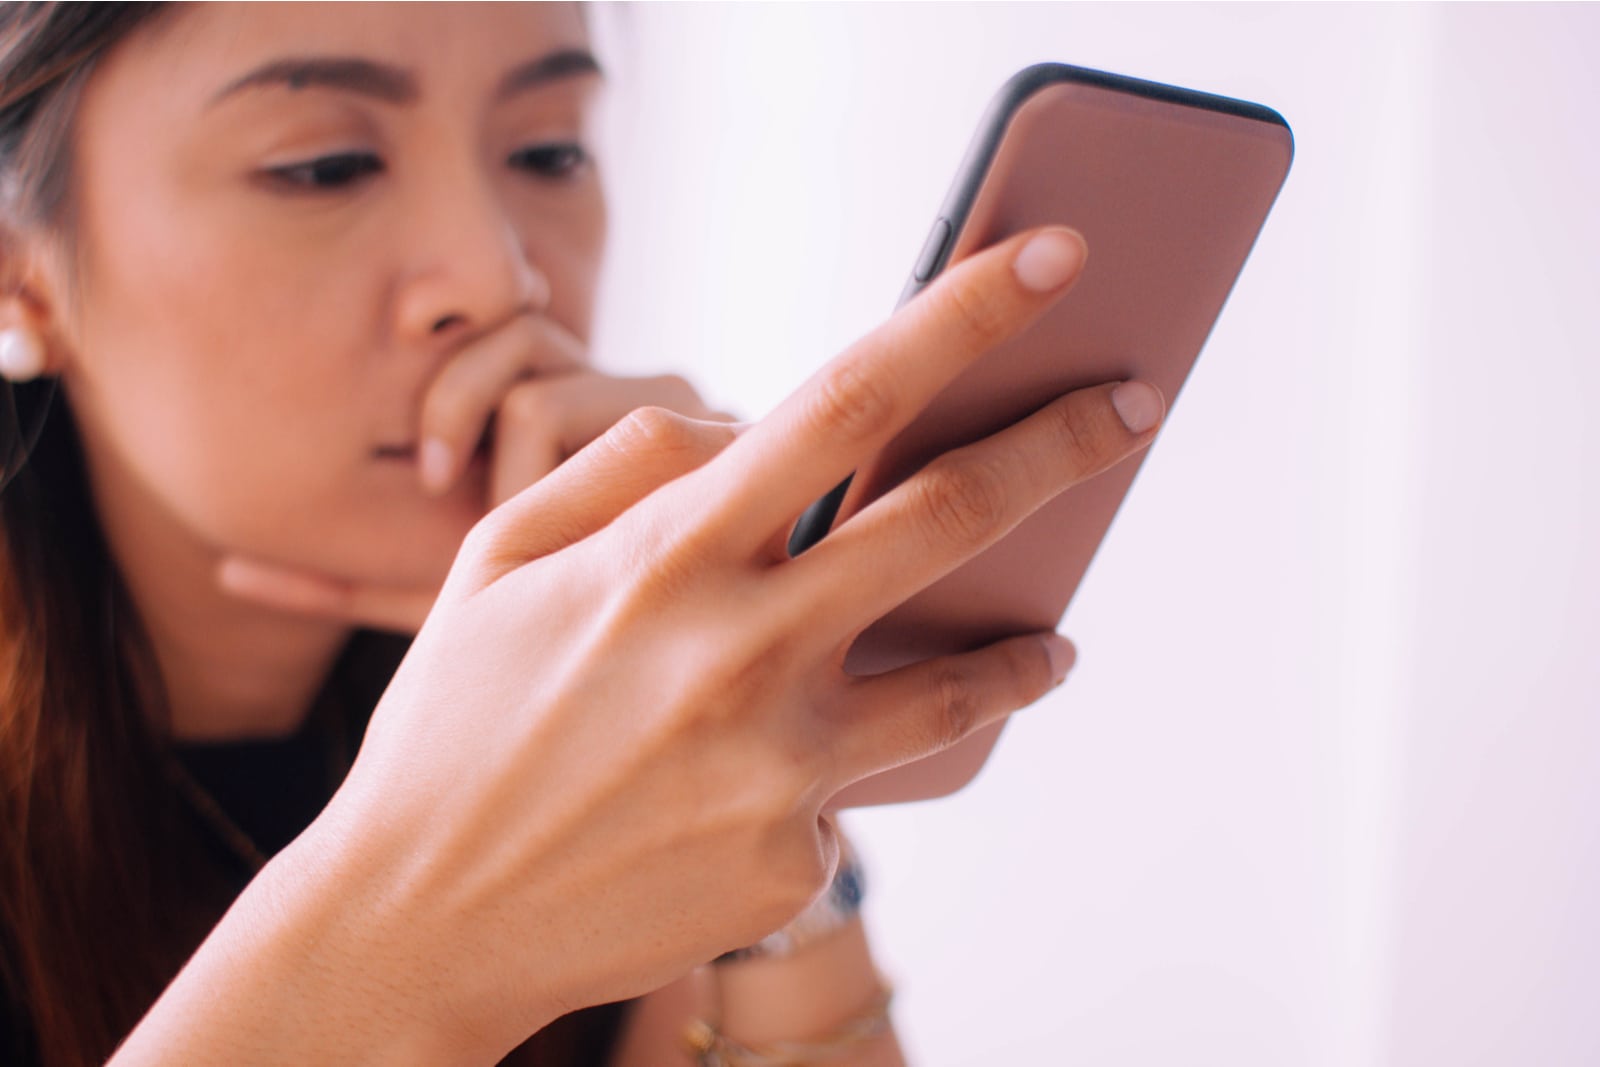 a sad Asian woman uses a smartphone